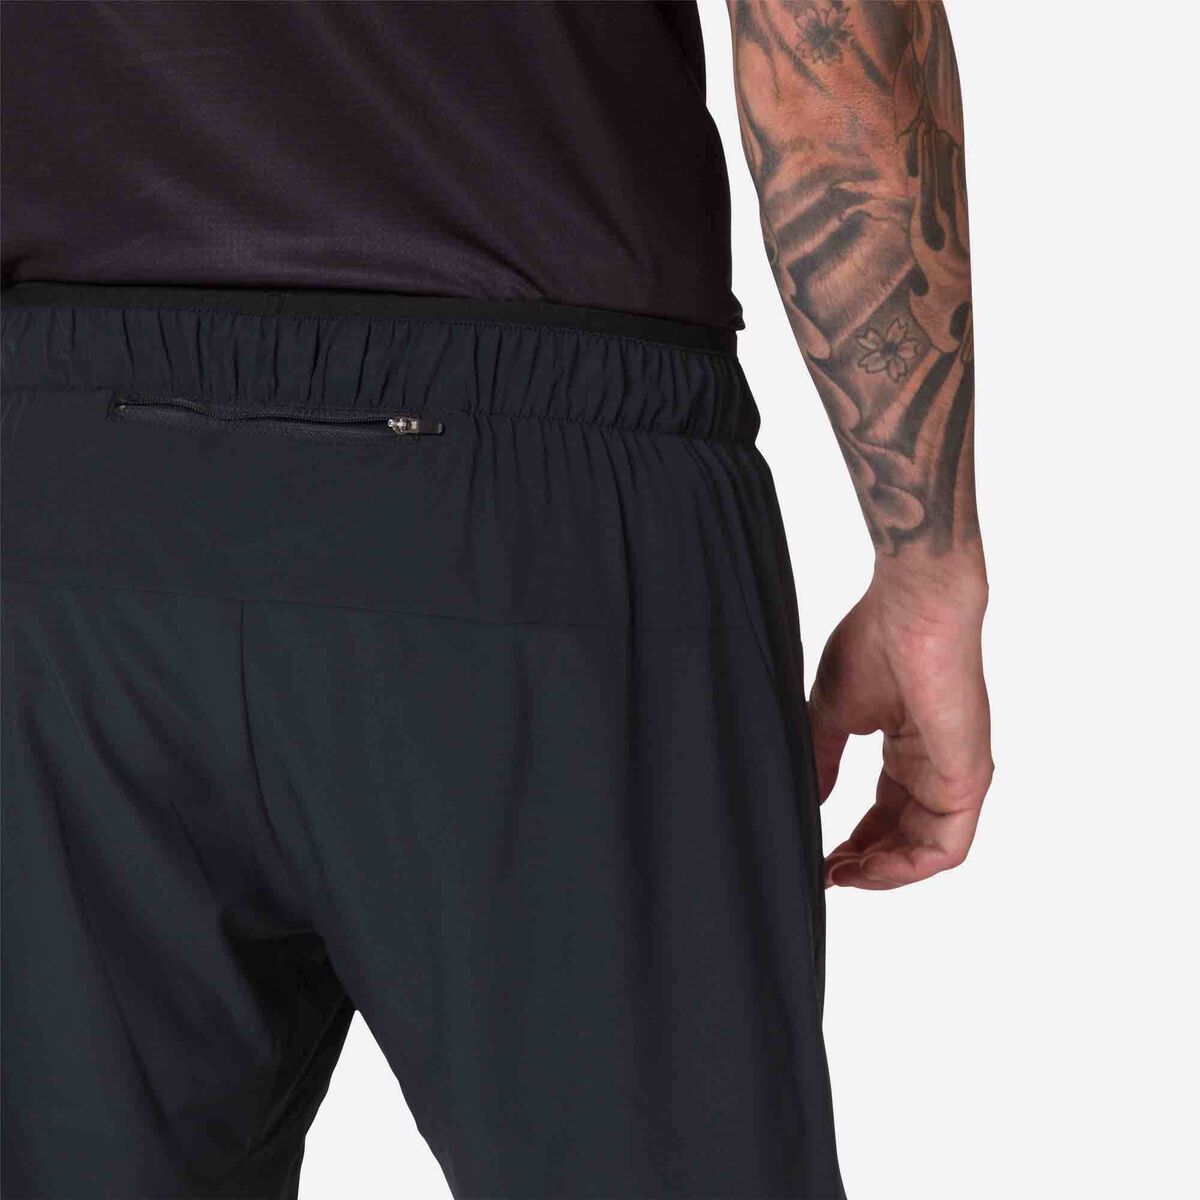 Black 3 Sporty Shorts - XS/L/XL/2XL only – Liberte Lifestyles